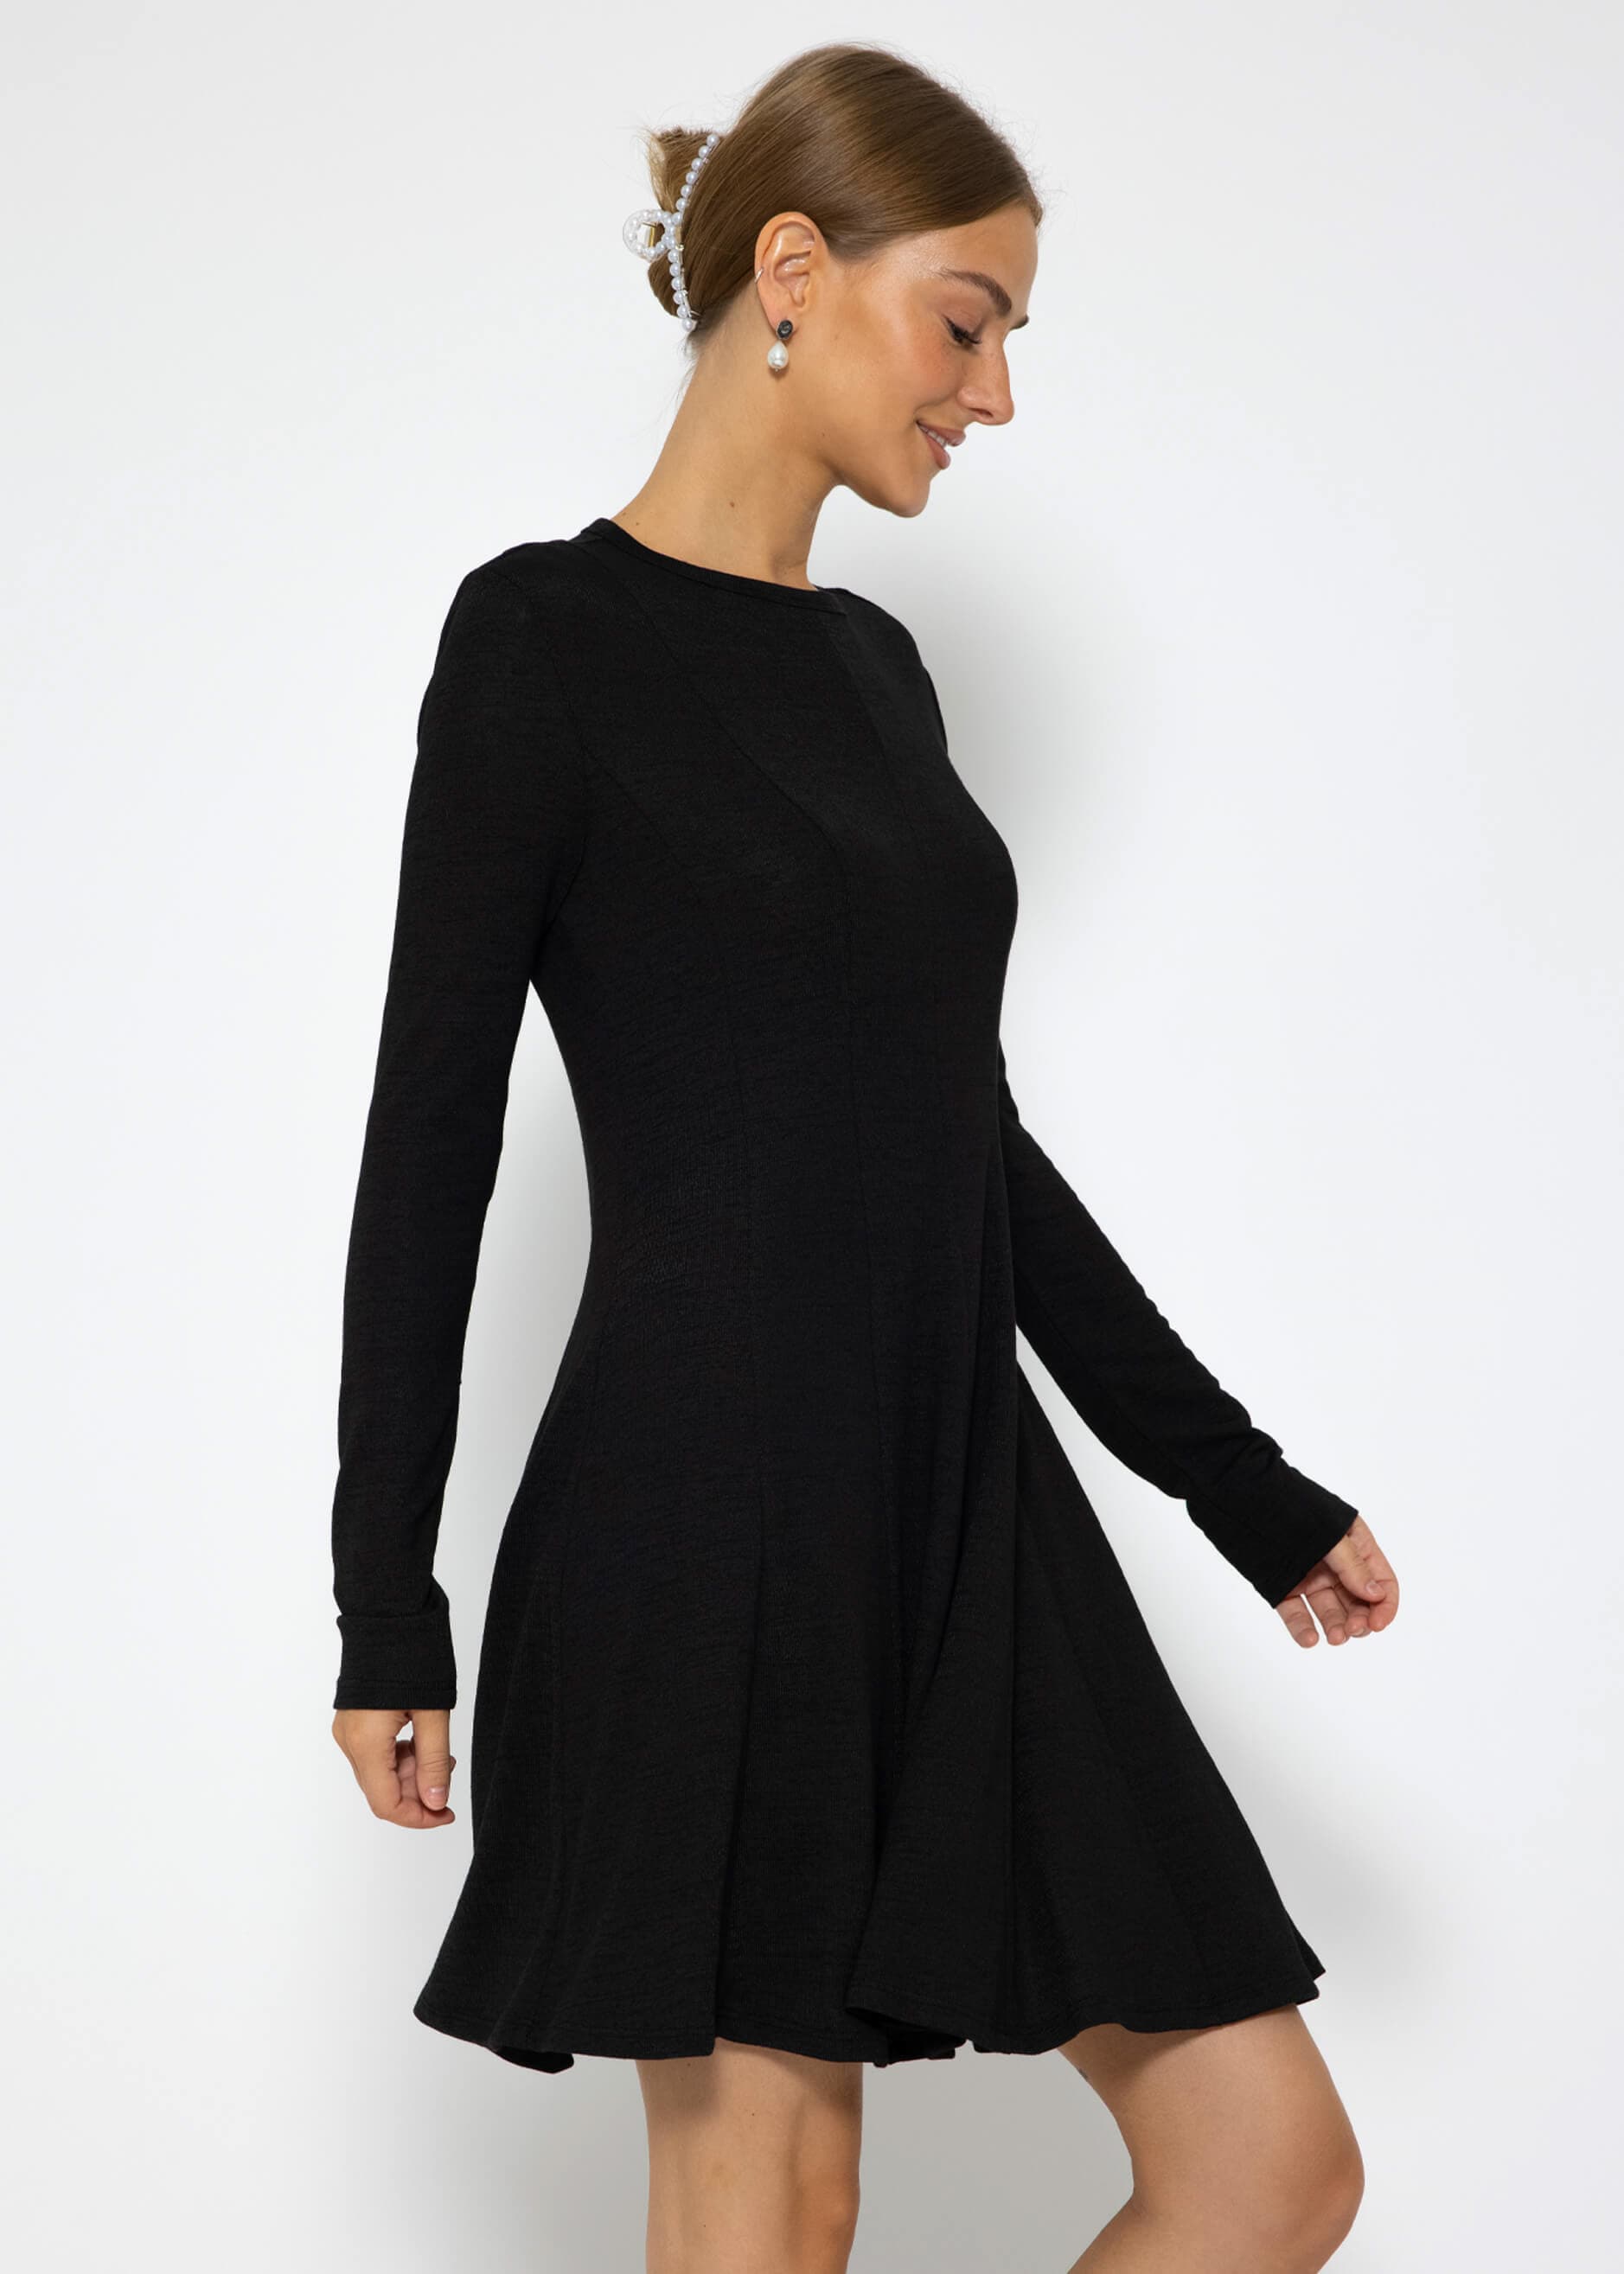 Langarm Jerseykleid - schwarz | Kleider | Bekleidung | SASSYCLASSY